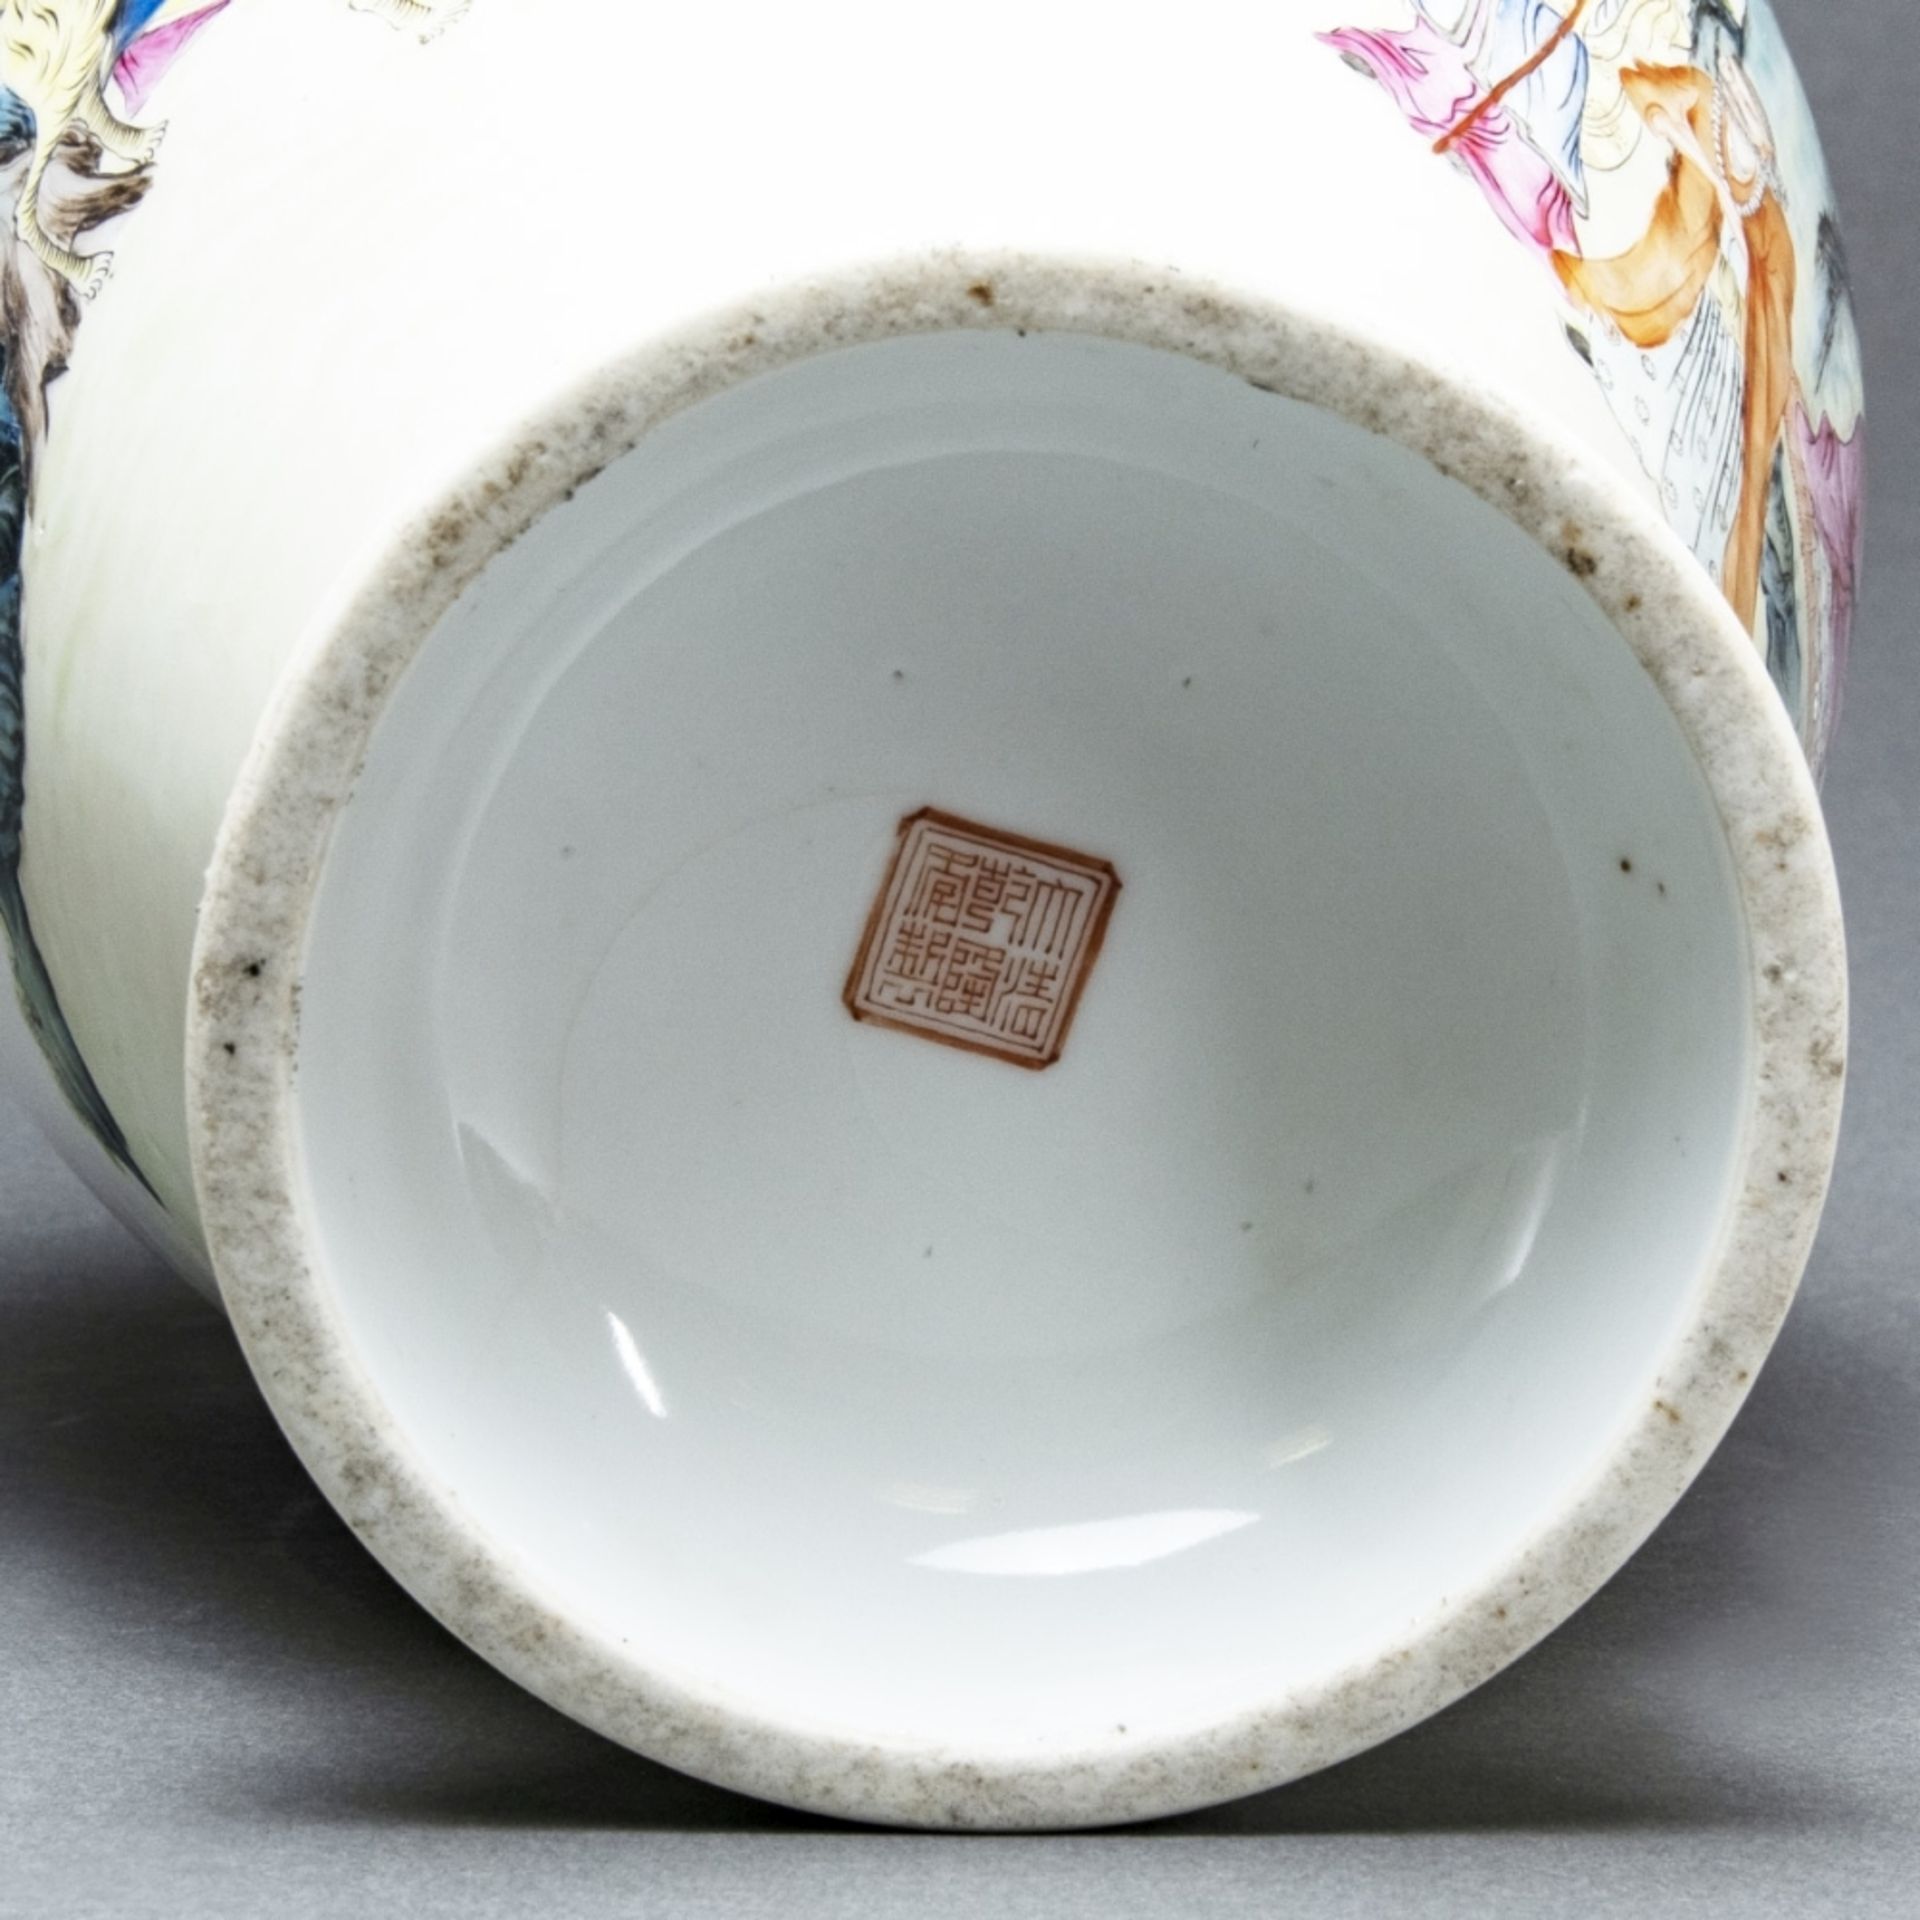 Famille rose-Vase, China, Qing-Dynastie, Ende 19. Jahrhundert - Image 3 of 3